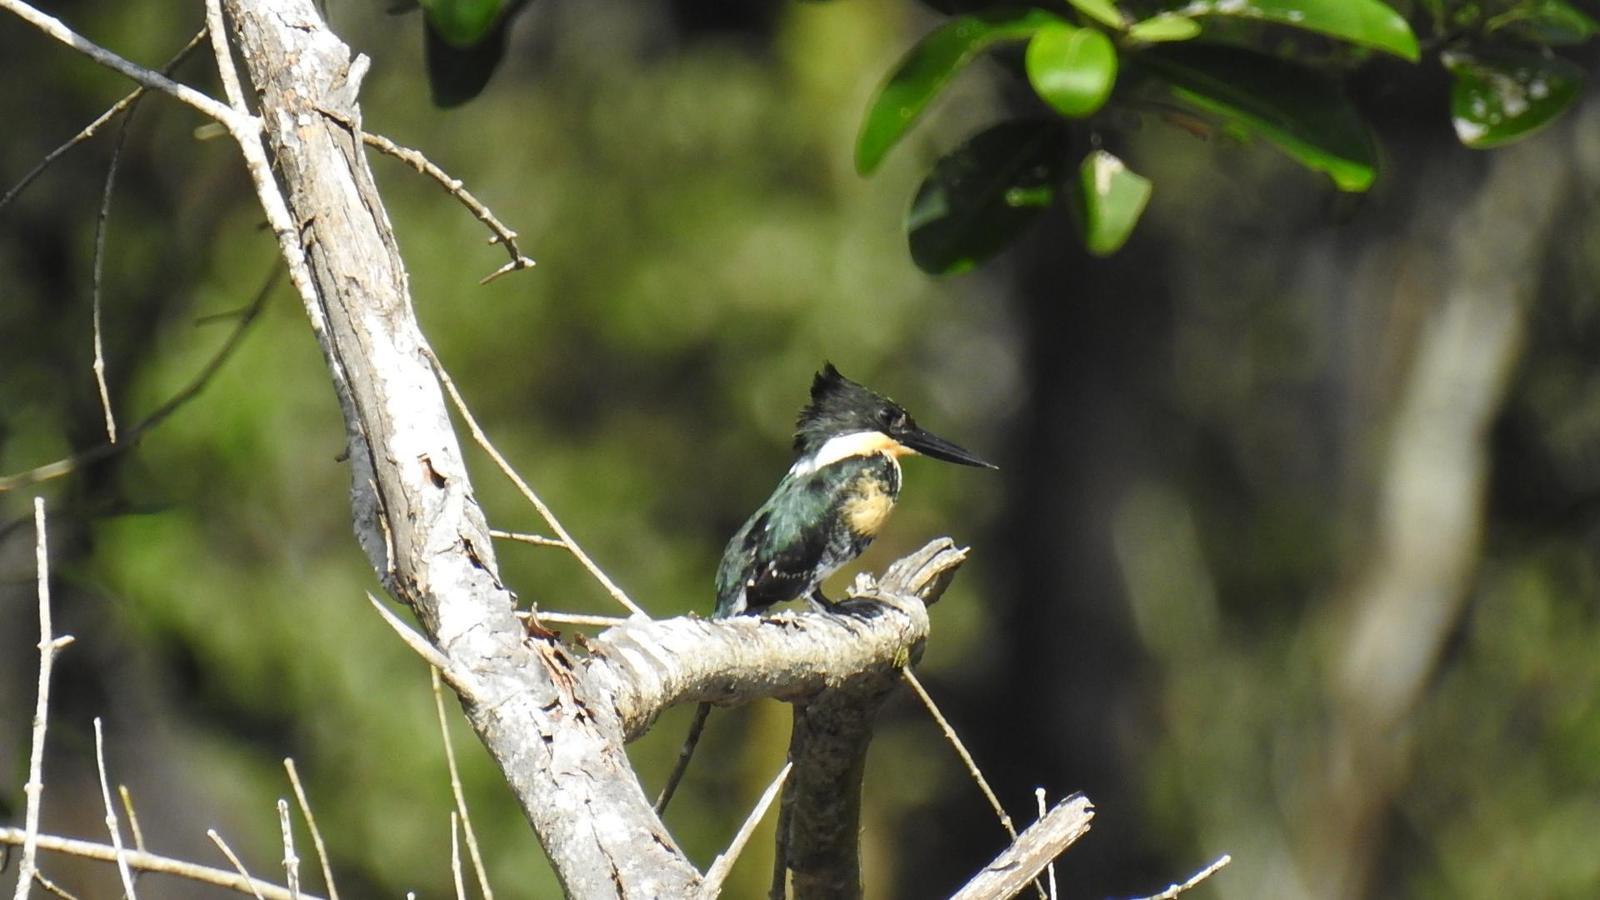 Green Kingfisher Photo by Julio Delgado